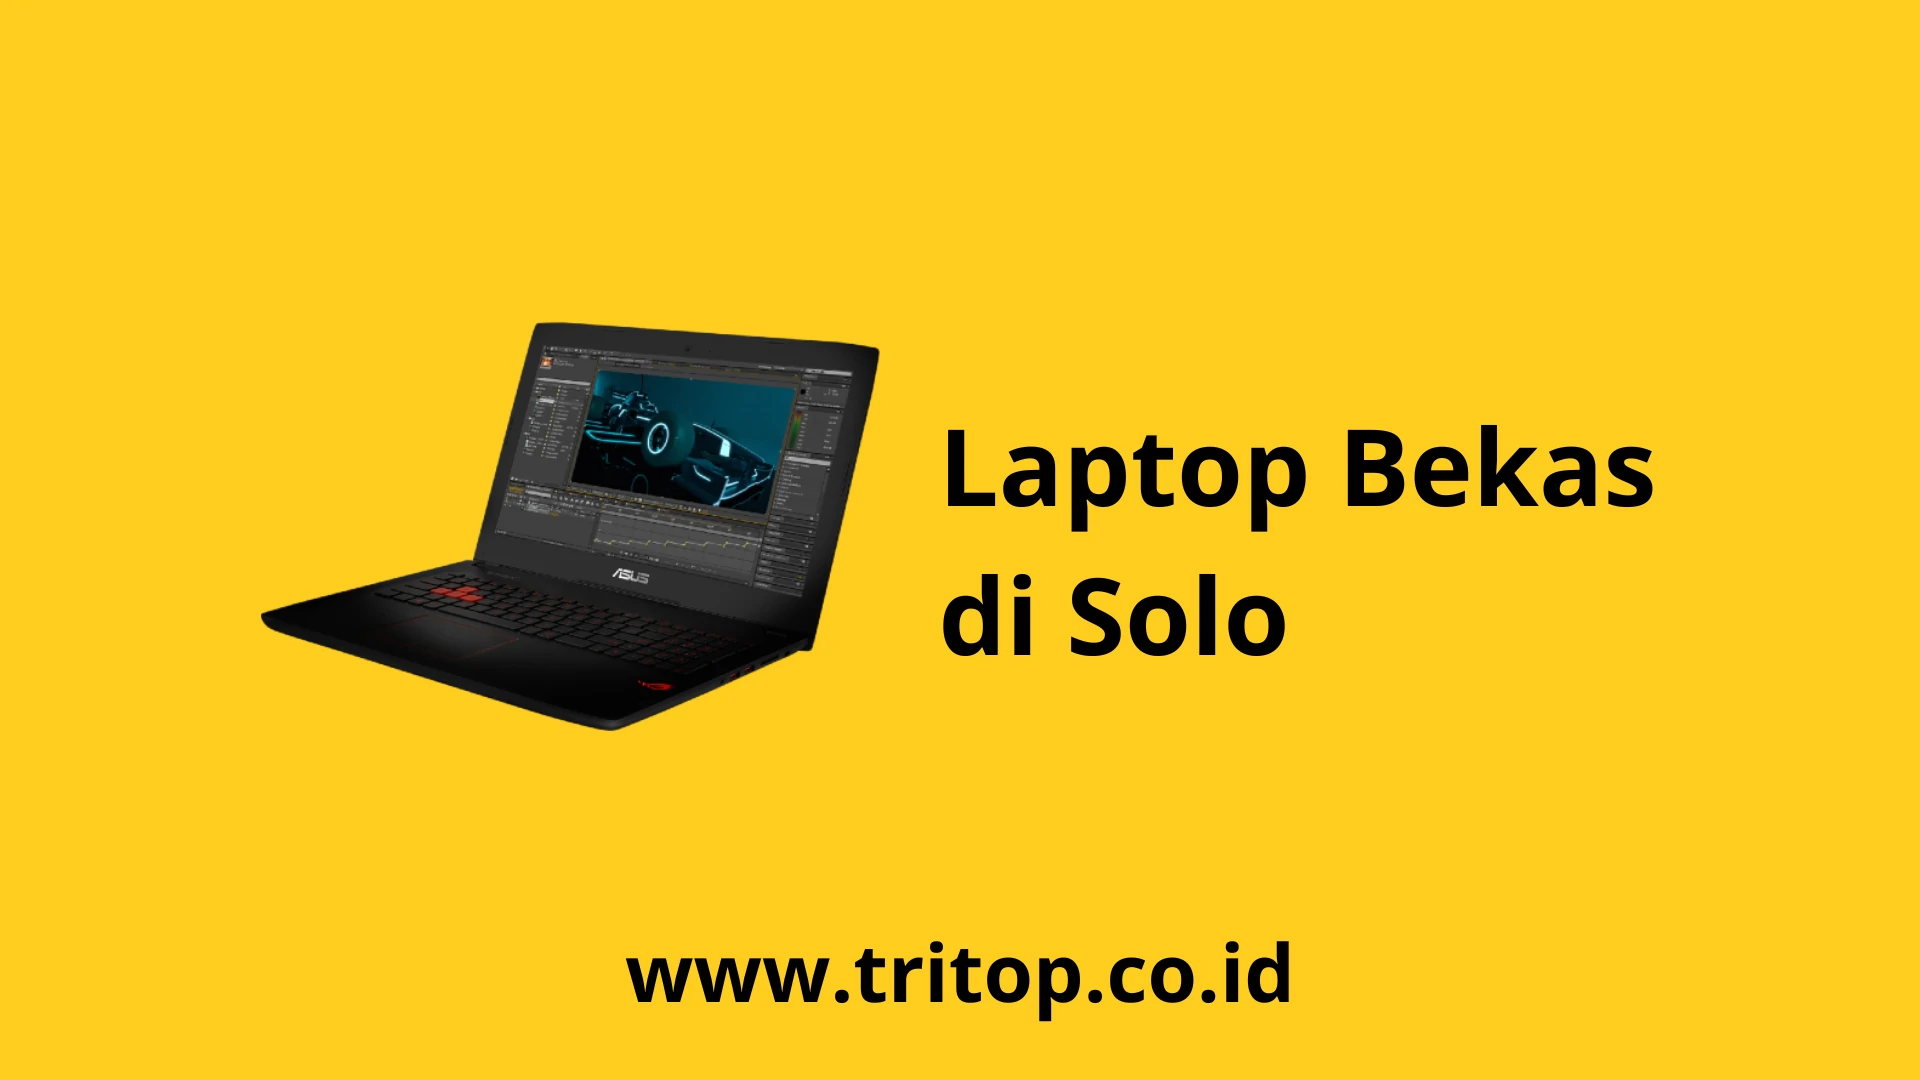 Laptop Bekas Solo Tritop.co.id